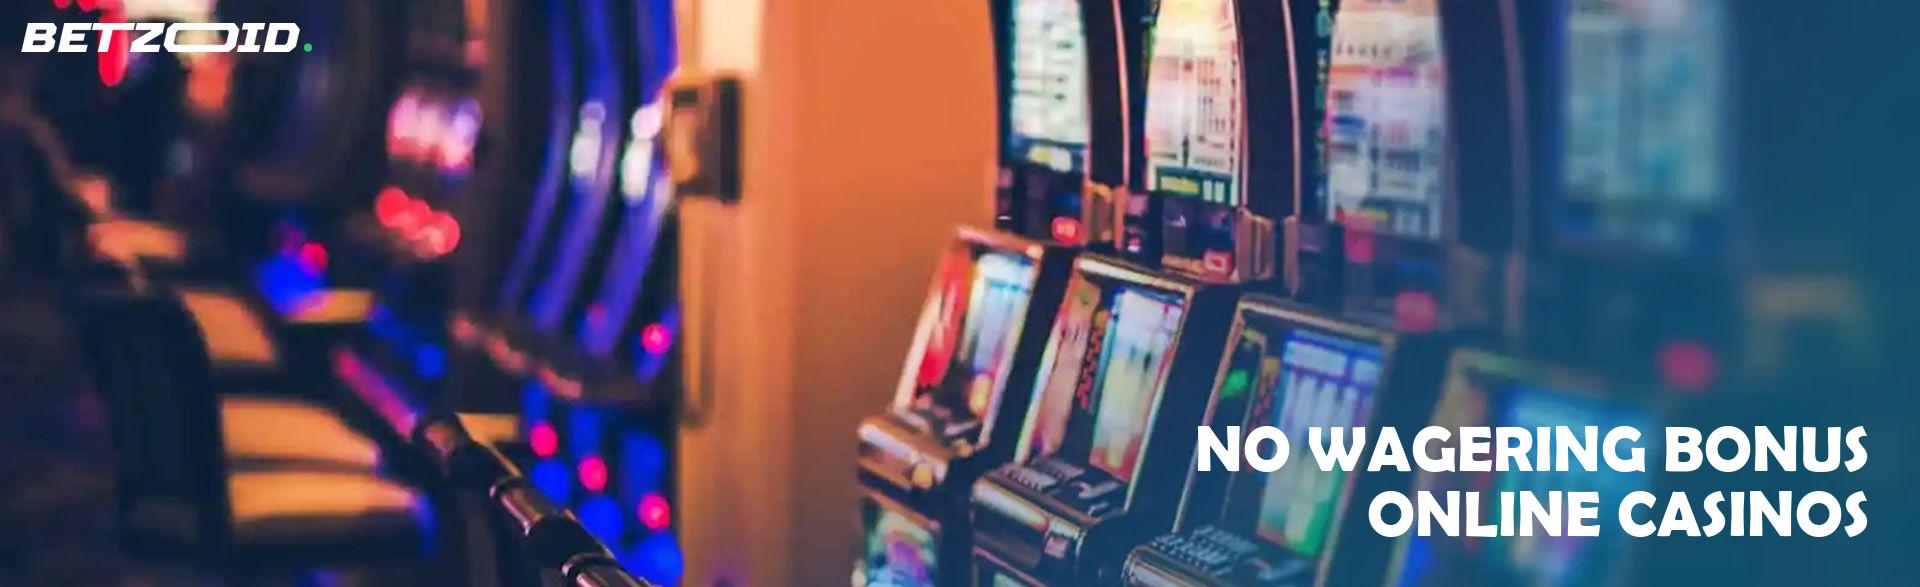 No Wagering Bonus Online Casinos.